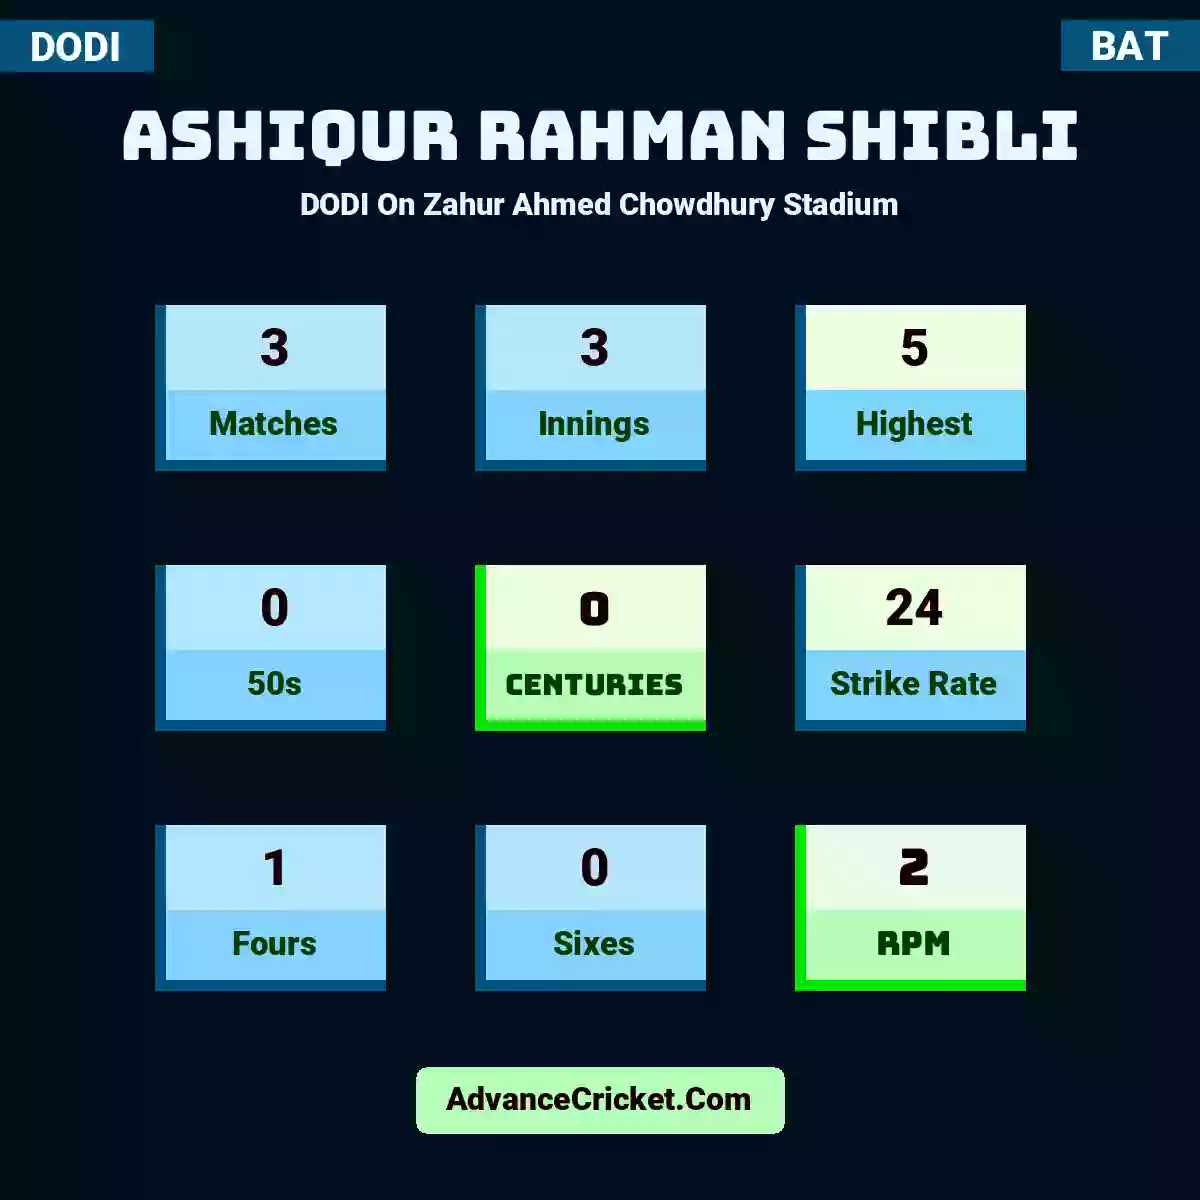 Ashiqur Rahman Shibli DODI  On Zahur Ahmed Chowdhury Stadium, Ashiqur Rahman Shibli played 3 matches, scored 5 runs as highest, 0 half-centuries, and 0 centuries, with a strike rate of 24. A.Rahman.Shibli hit 1 fours and 0 sixes, with an RPM of 2.